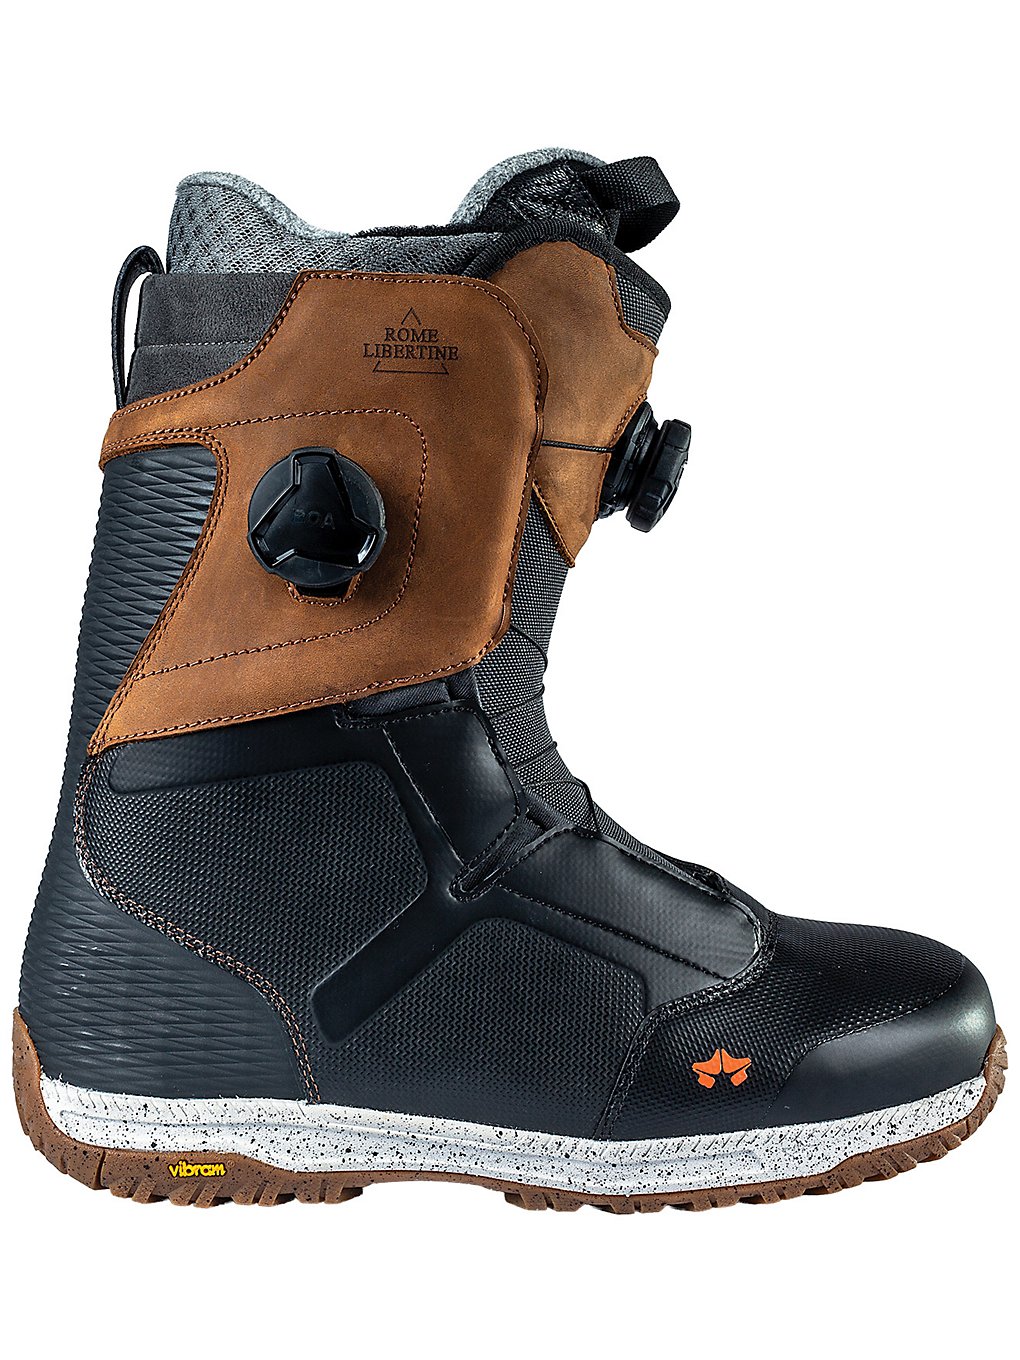 Rome Libertine Boa 2022 Snowboard Boots brown